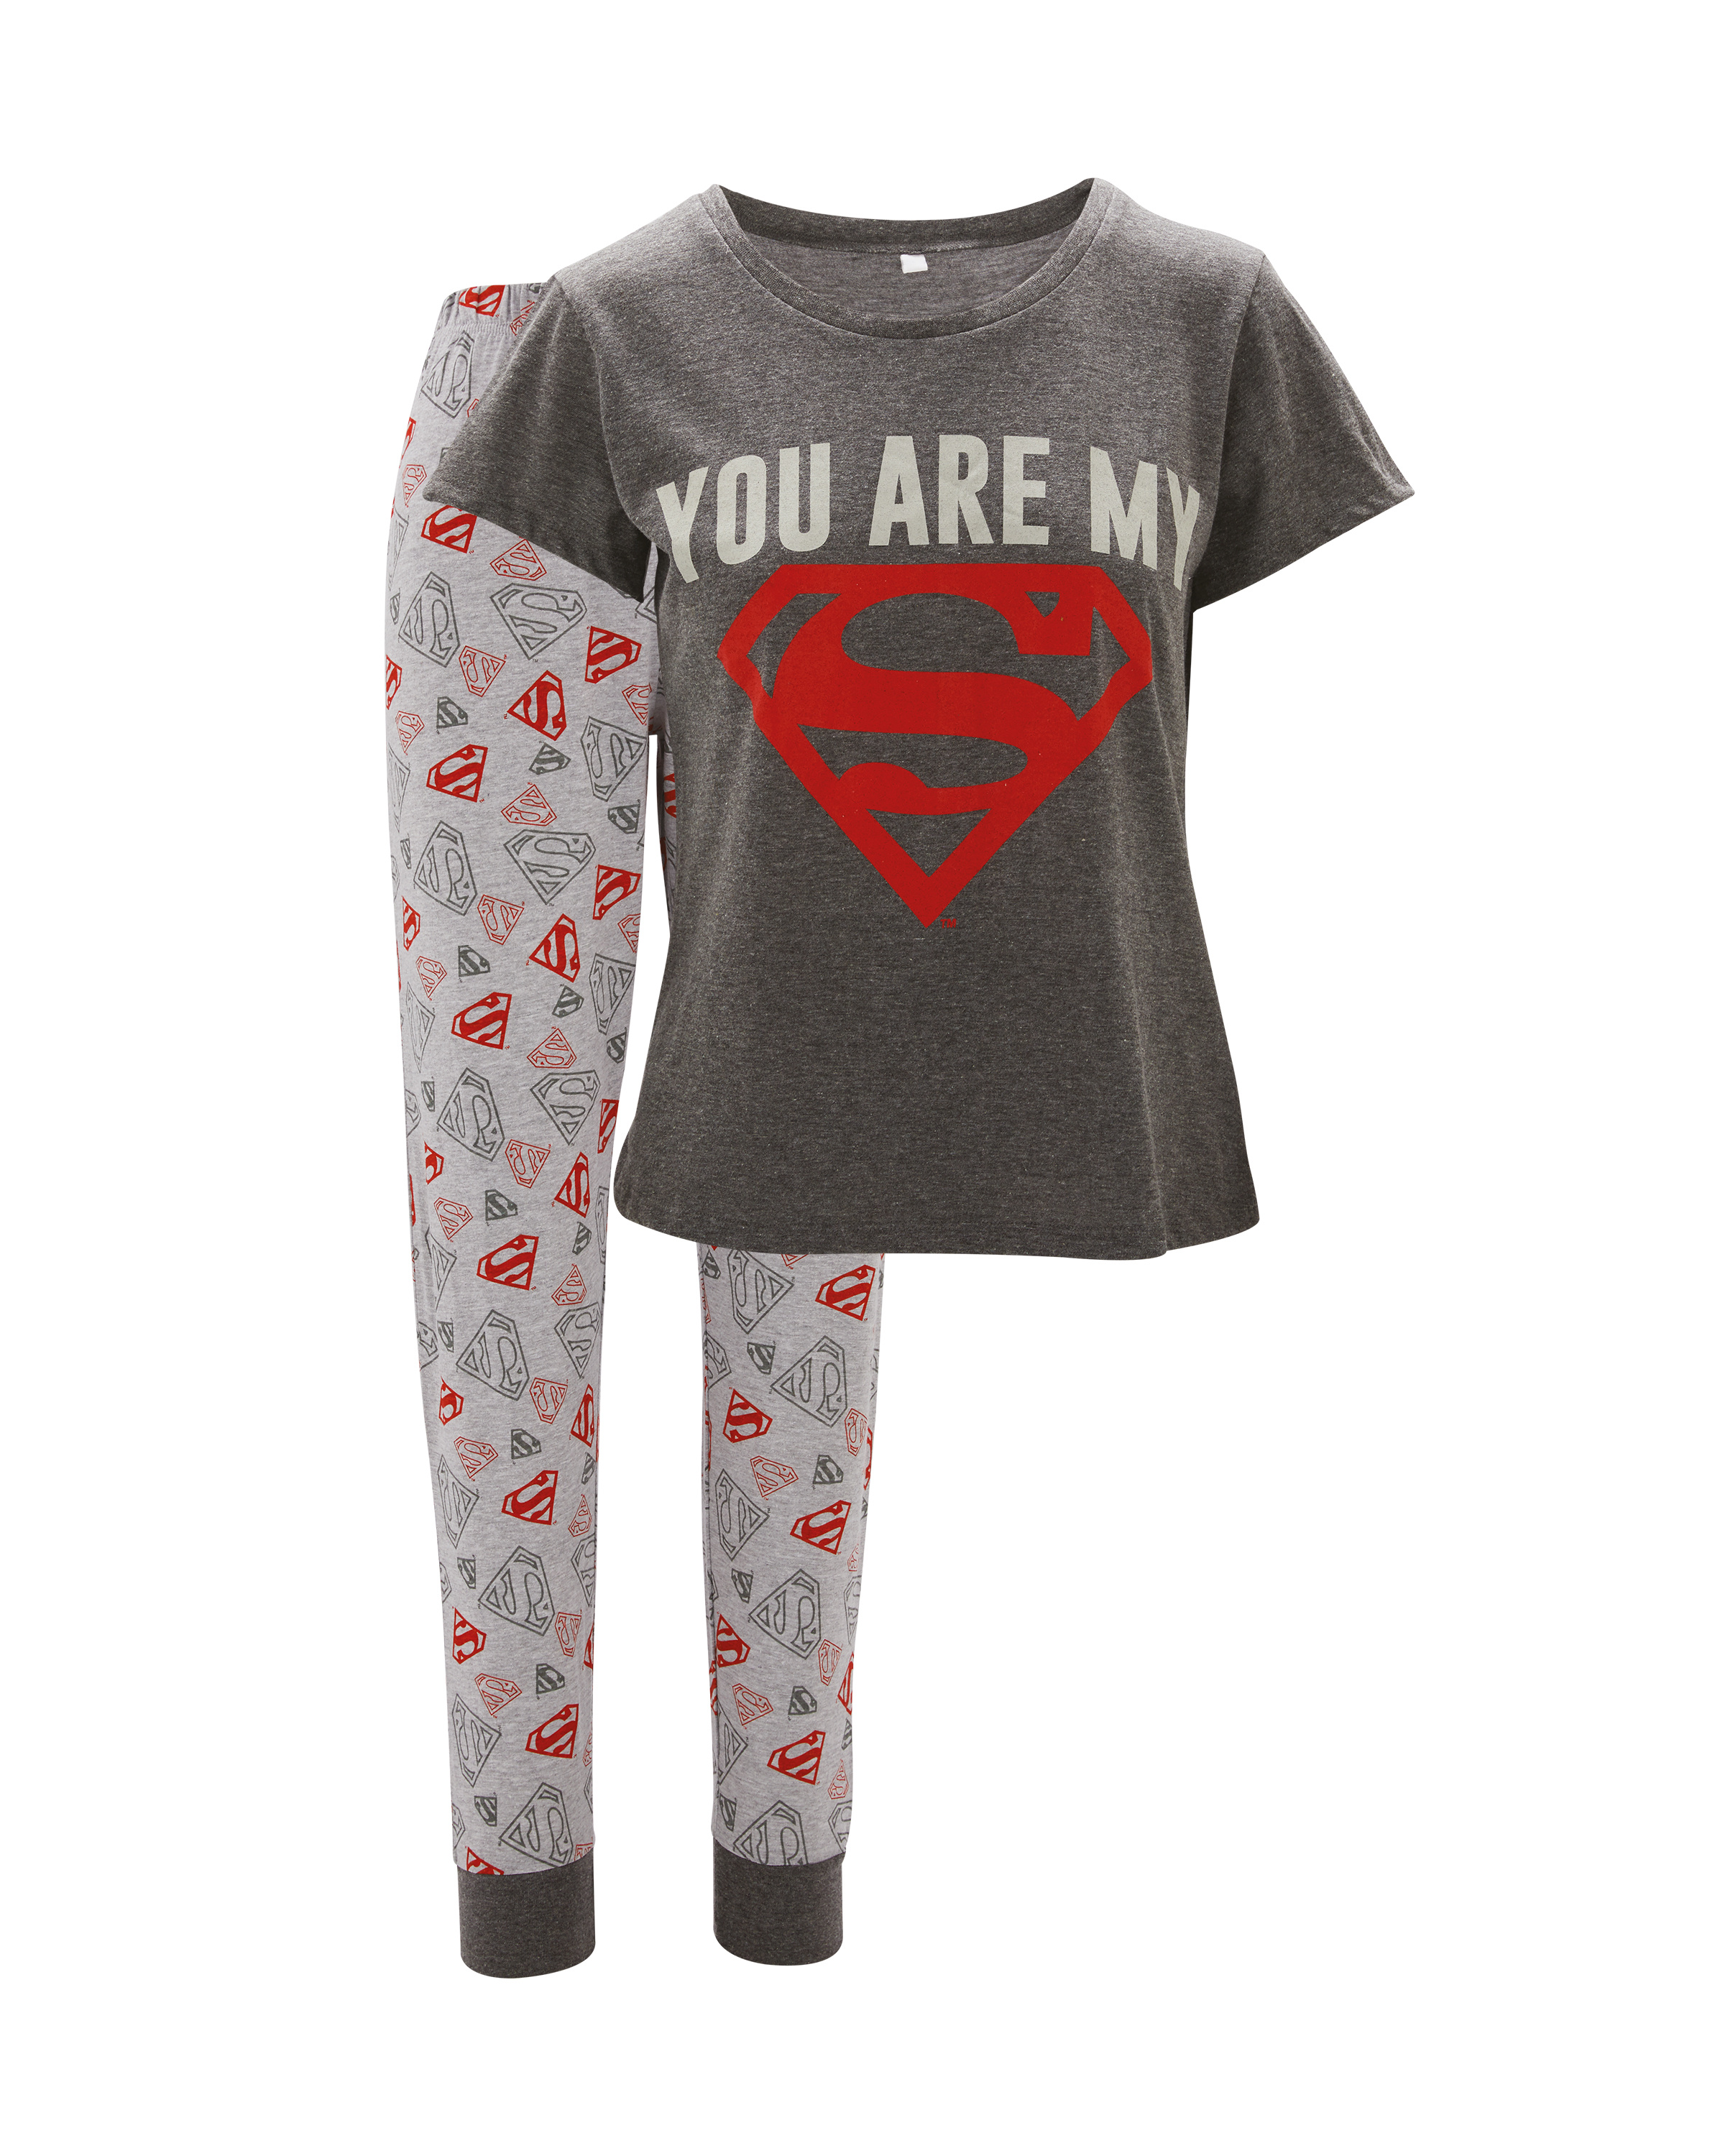 Ga terug Ritueel Gewend aan Ladies' Supergirl Pyjamas - ALDI UK